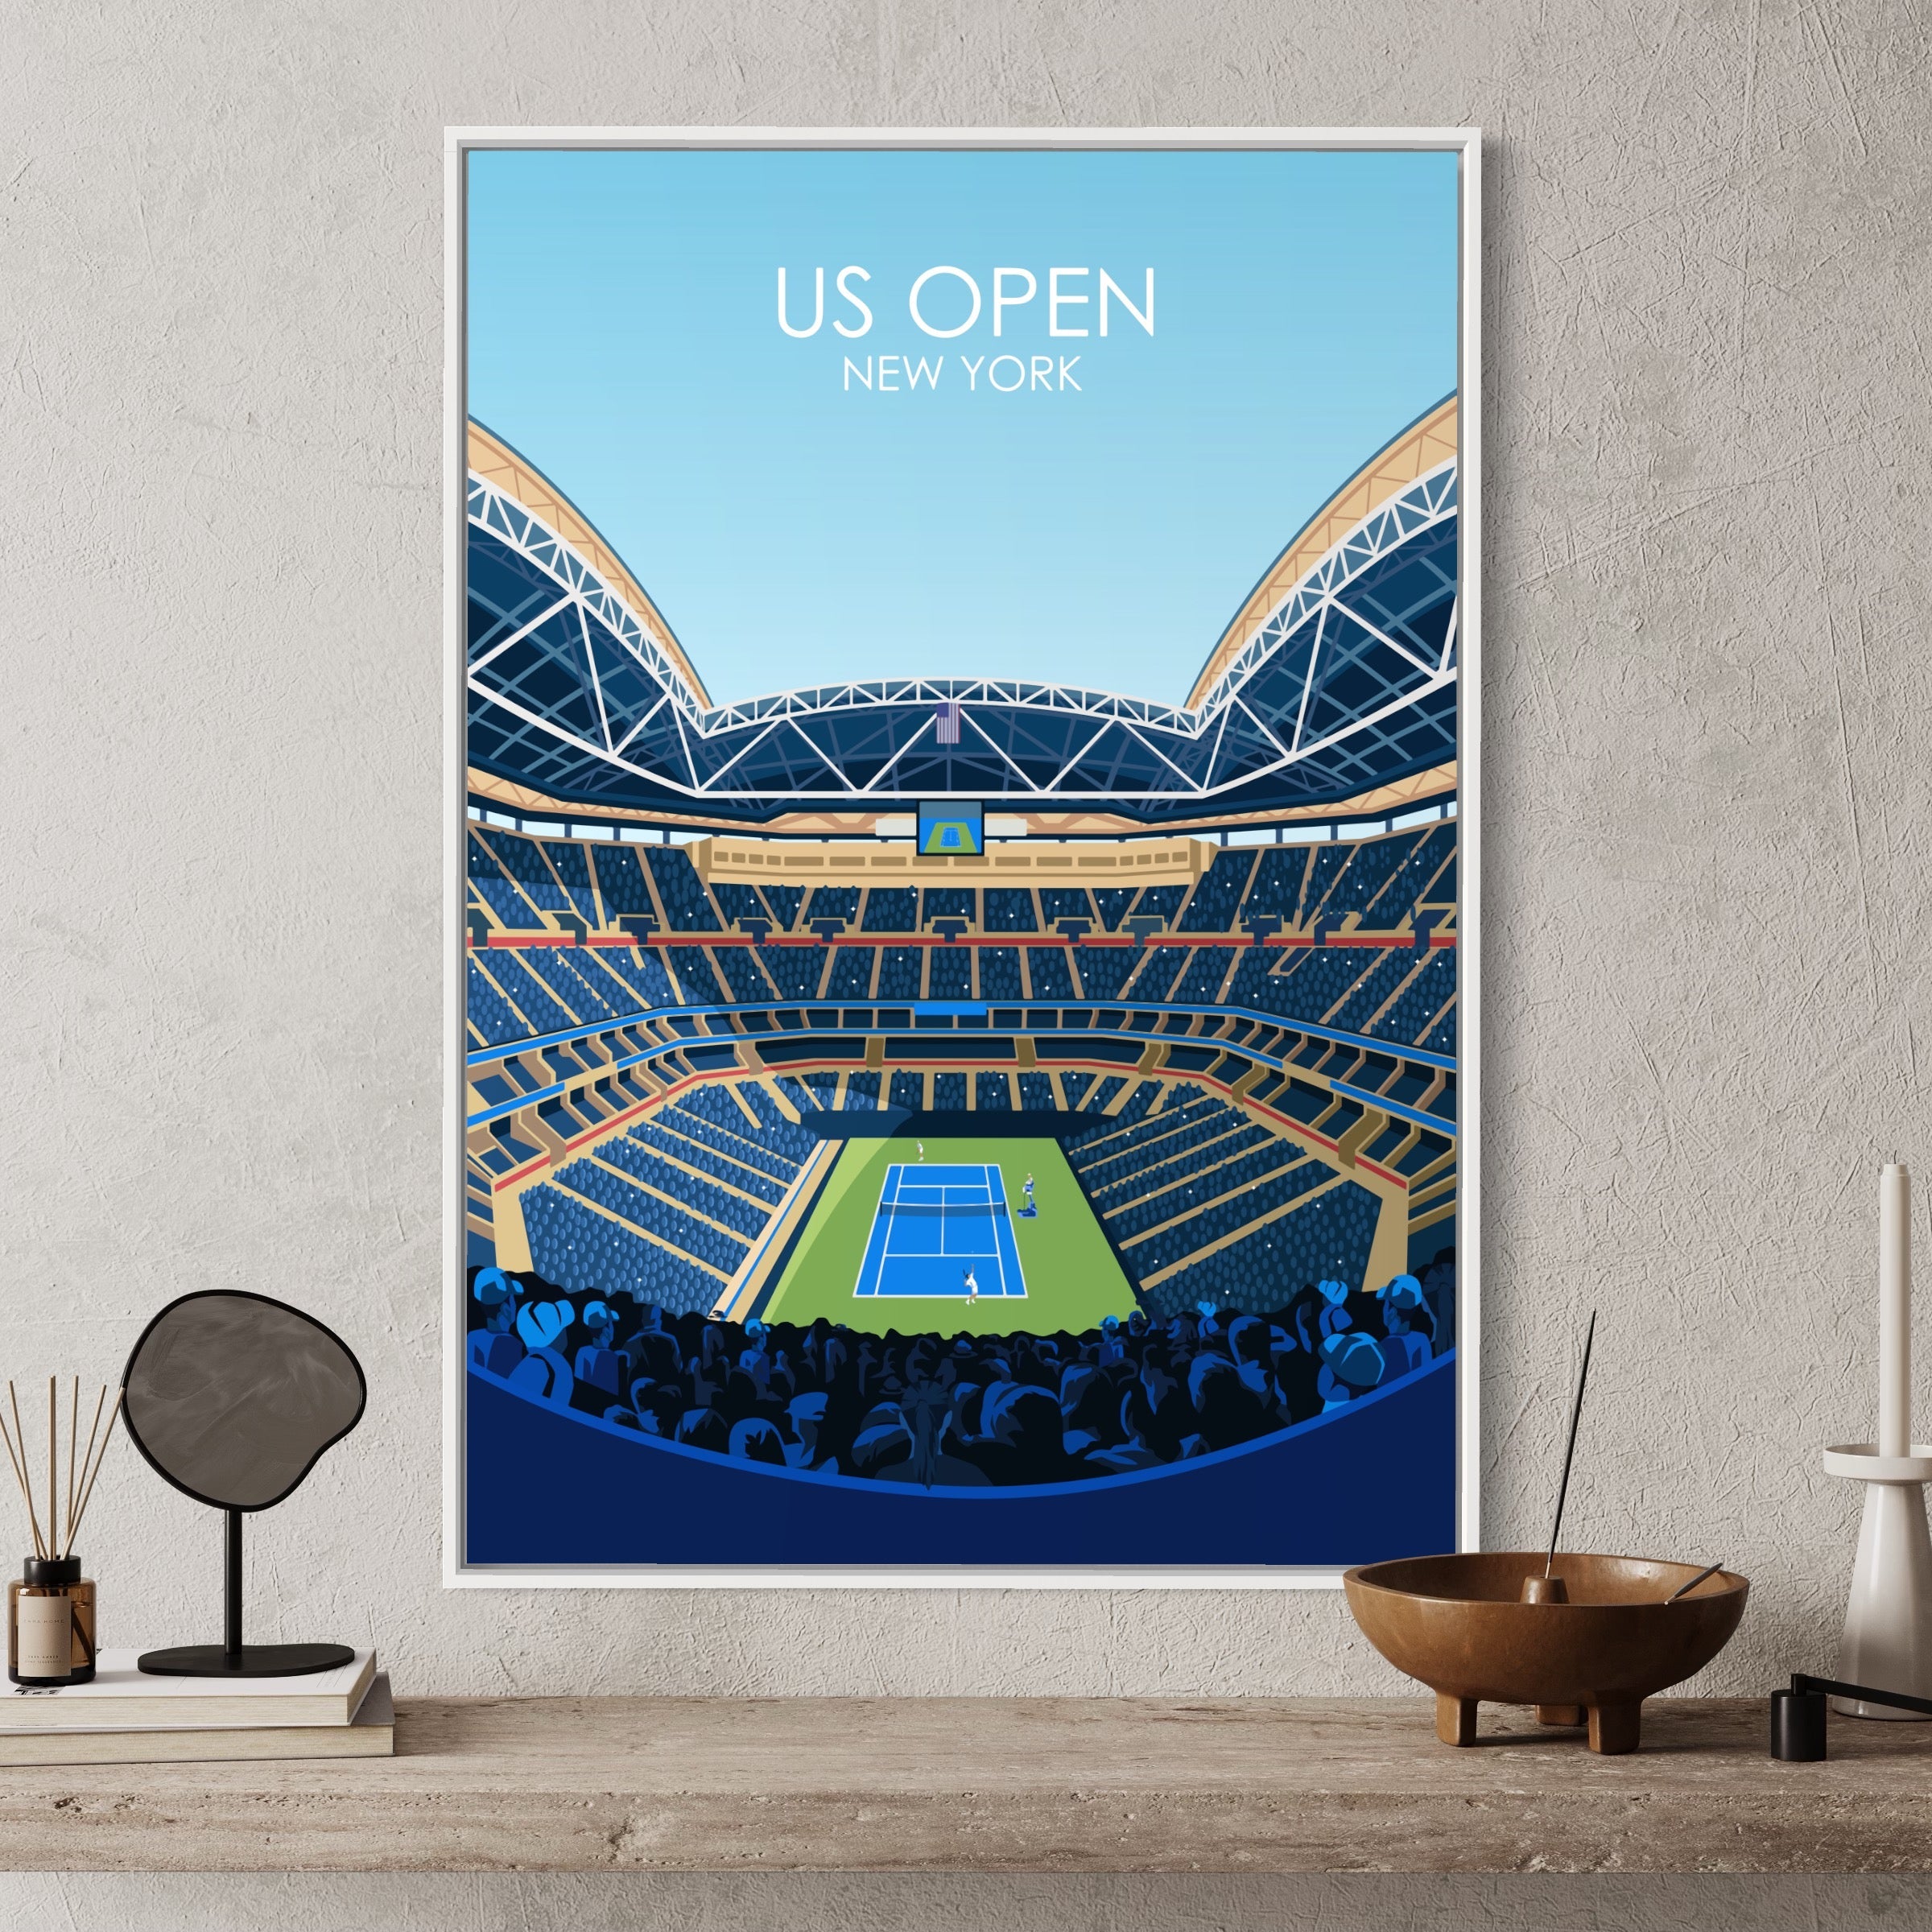 US Open tennis poster